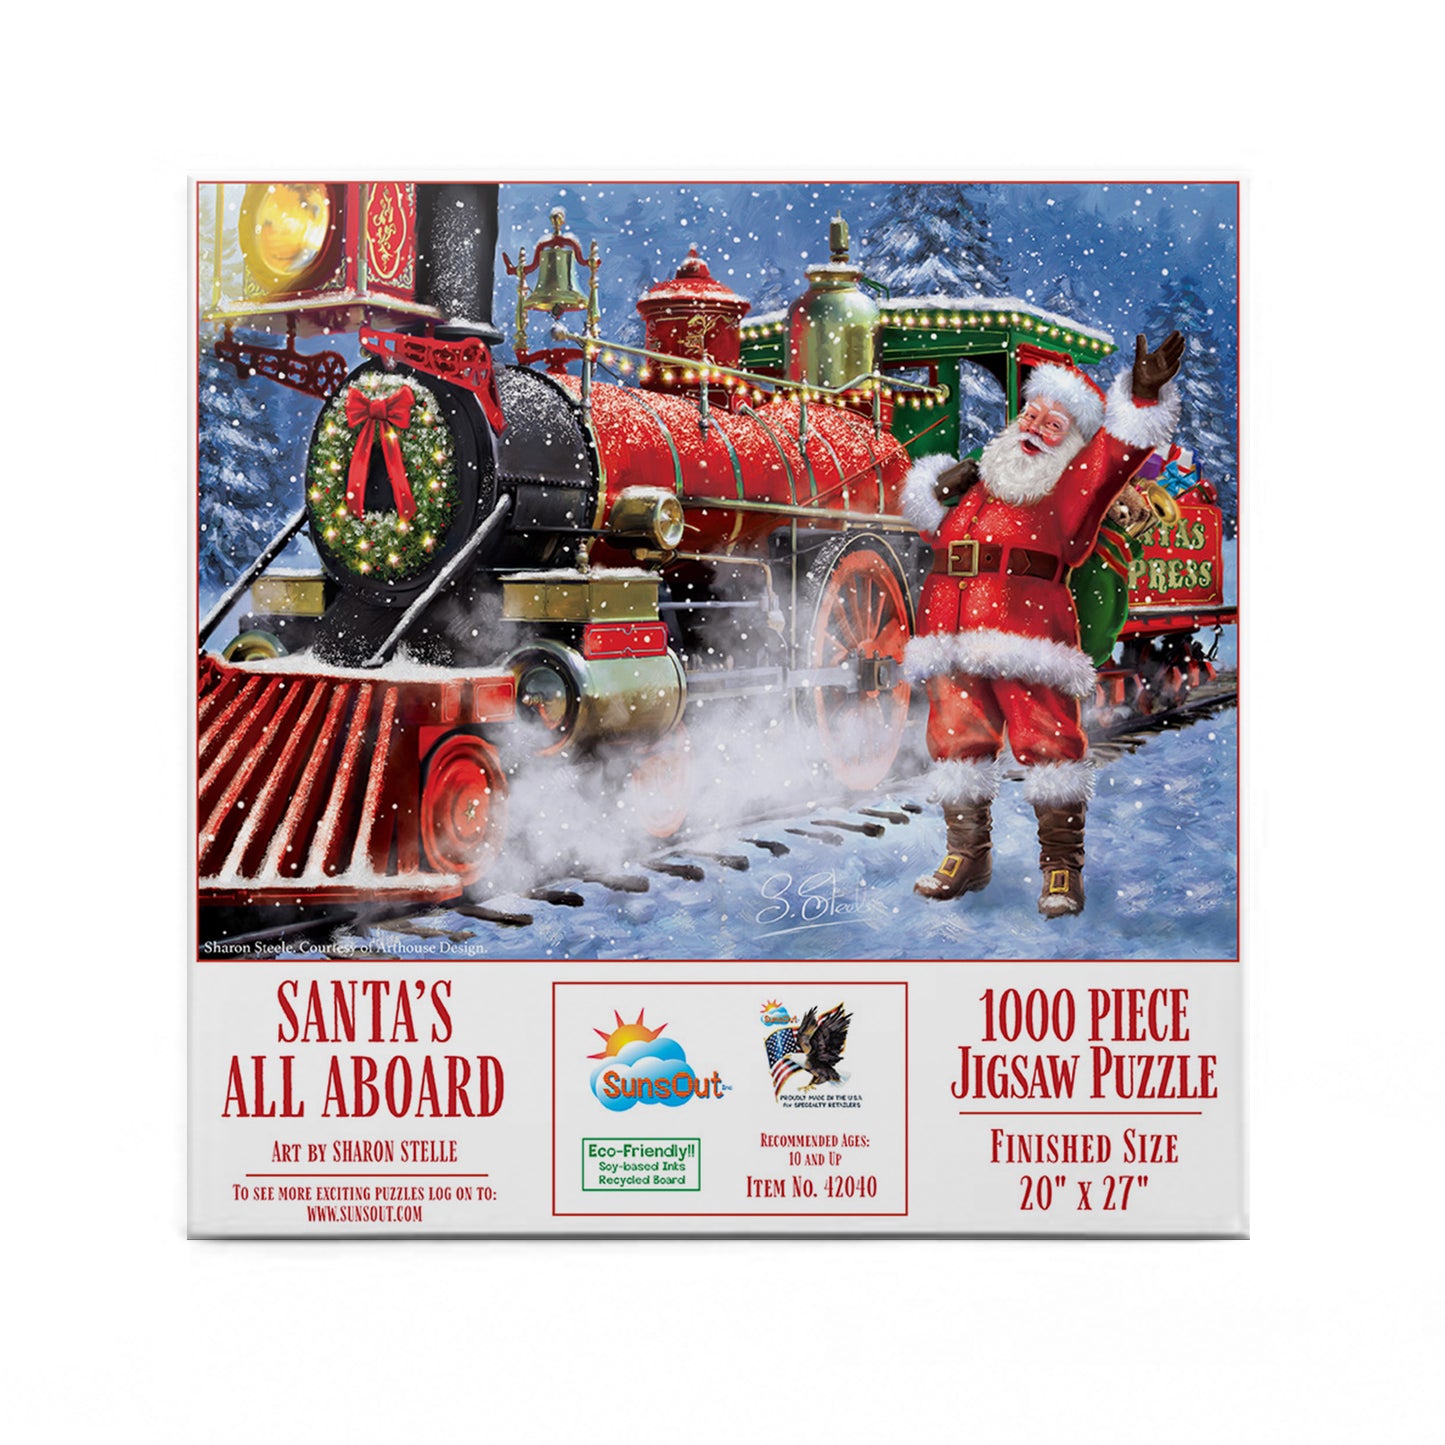 Santa's All Aboard - 1000 Piece Jigsaw Puzzle